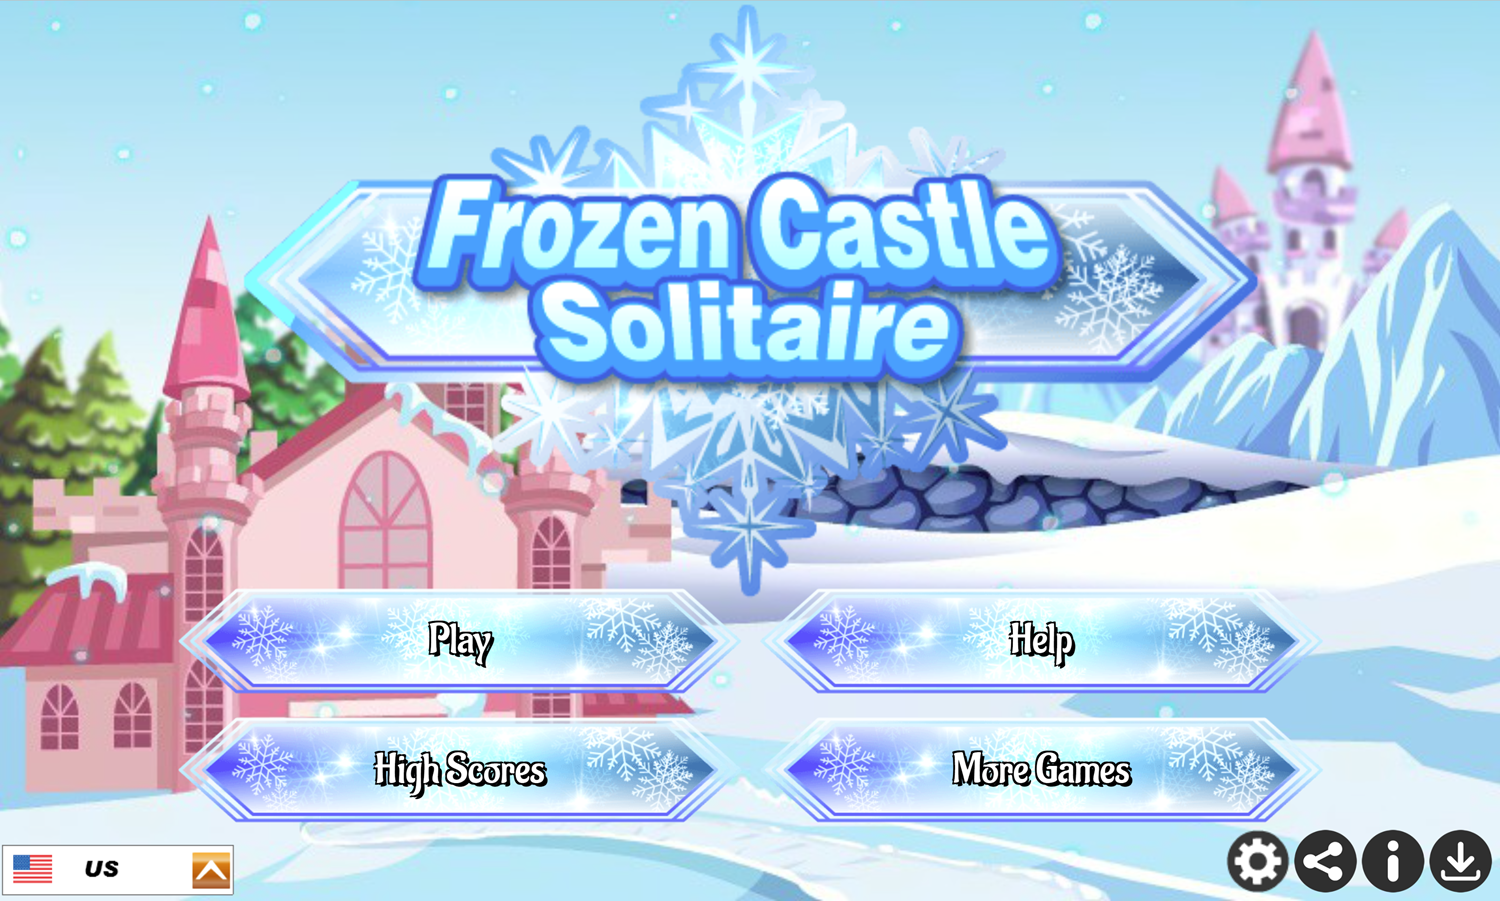 Frozen Castle Solitaire Game Welcome Screen Screenshot.